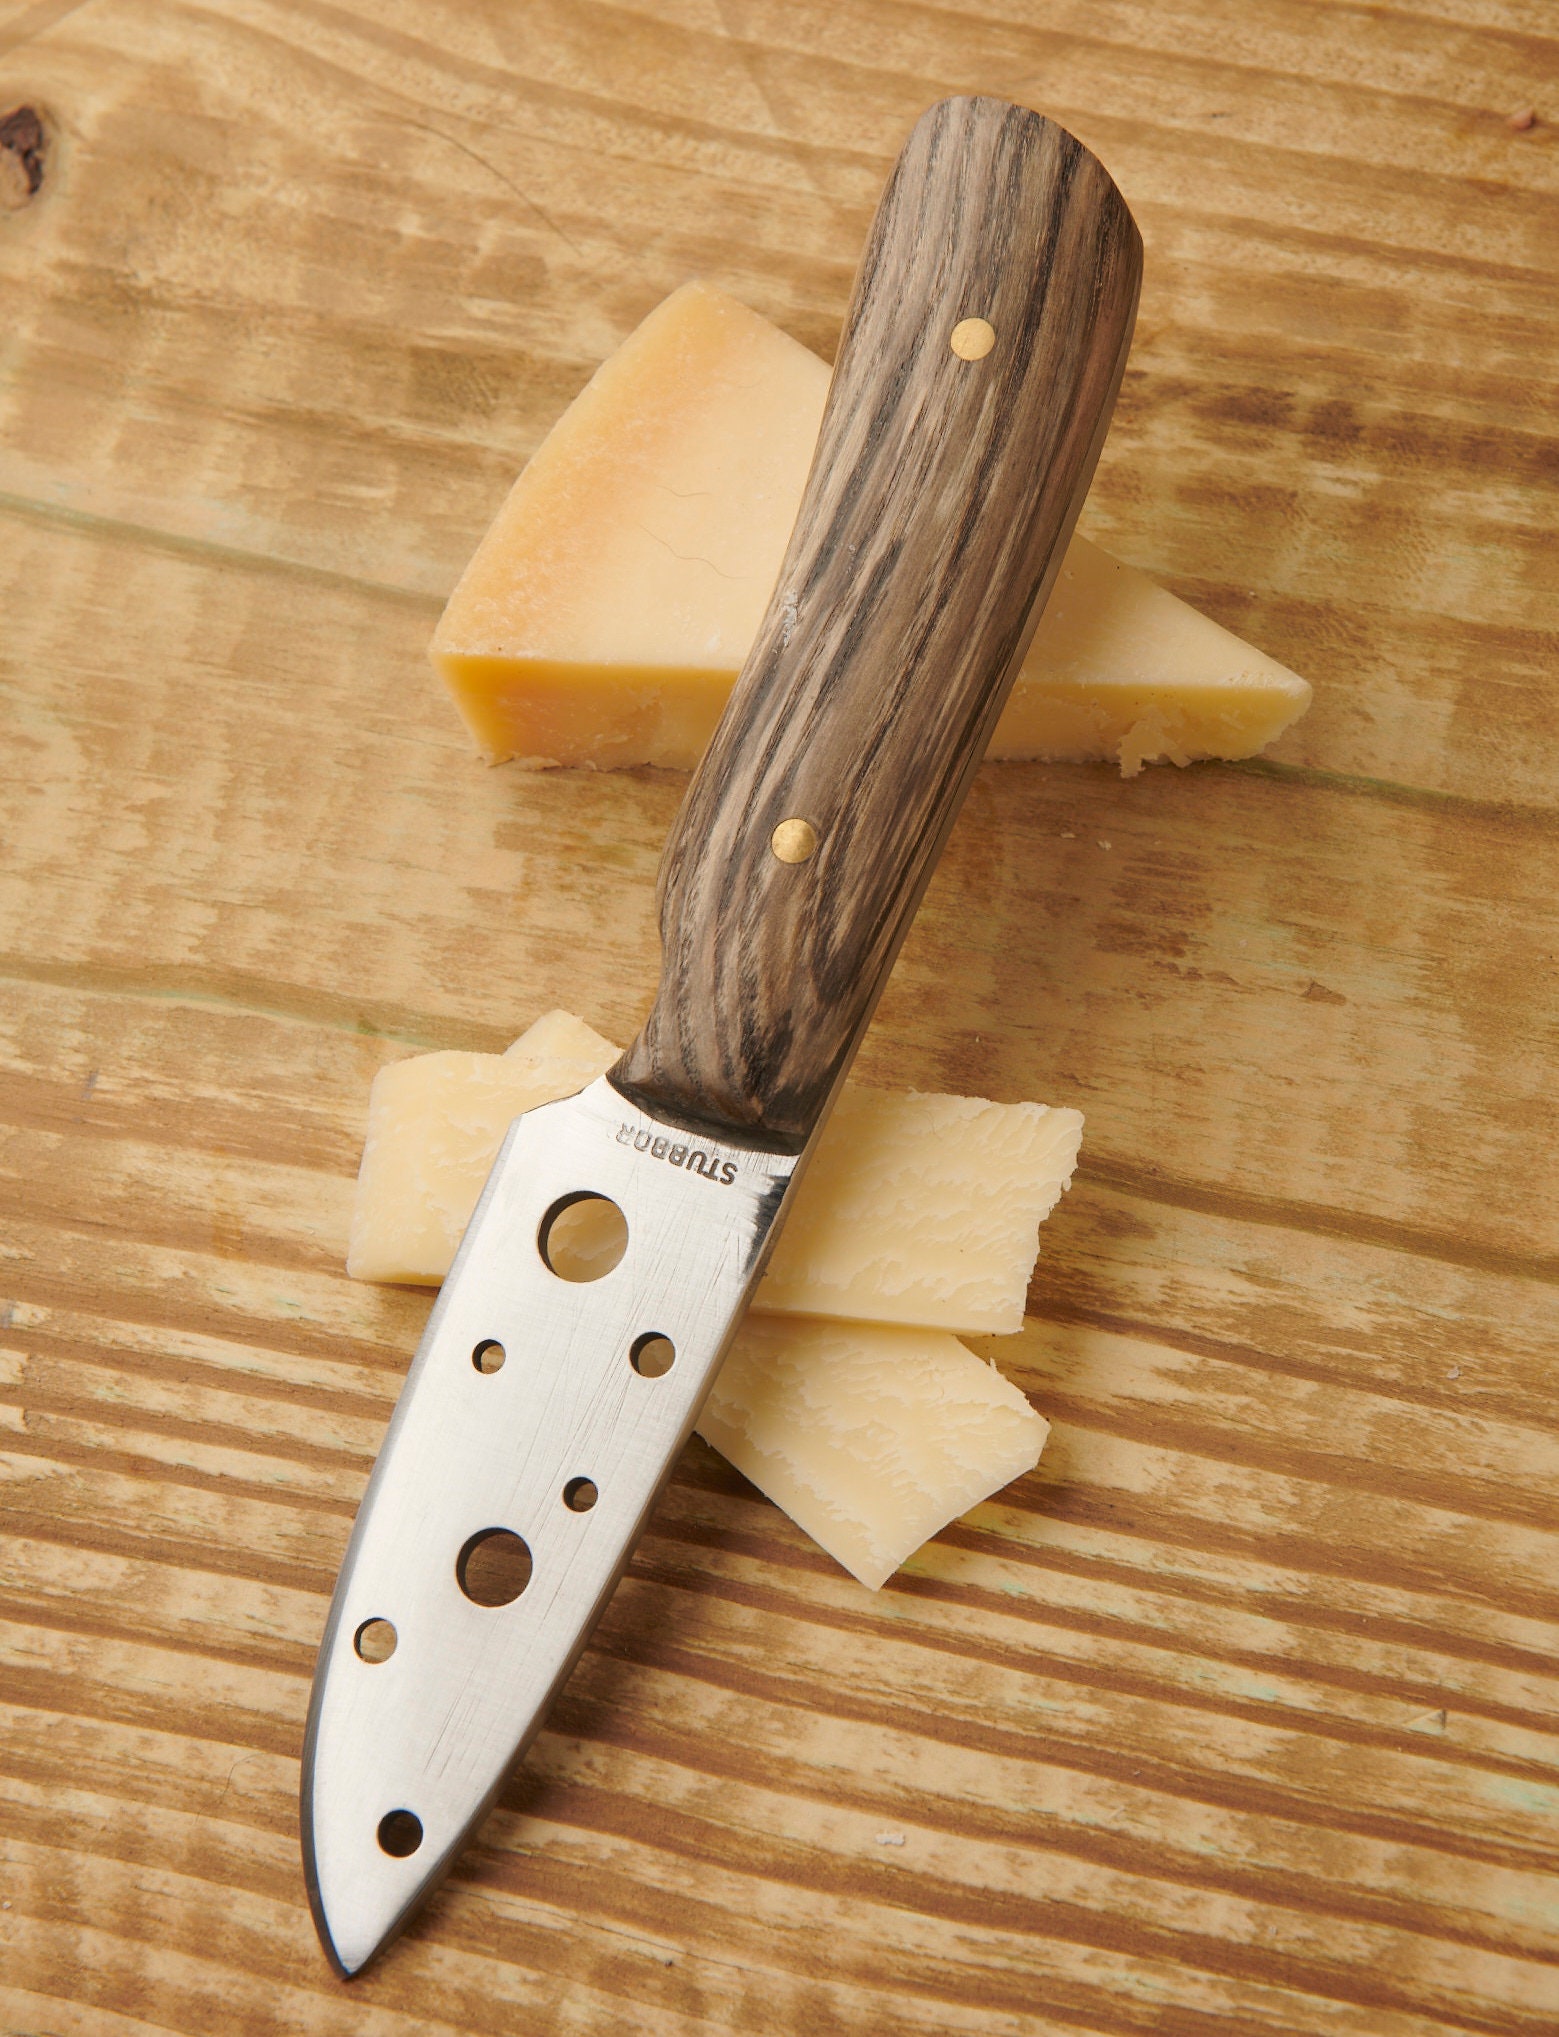  OTOTO Bert Cheese Knife, Gnome-Themed Multifunctional